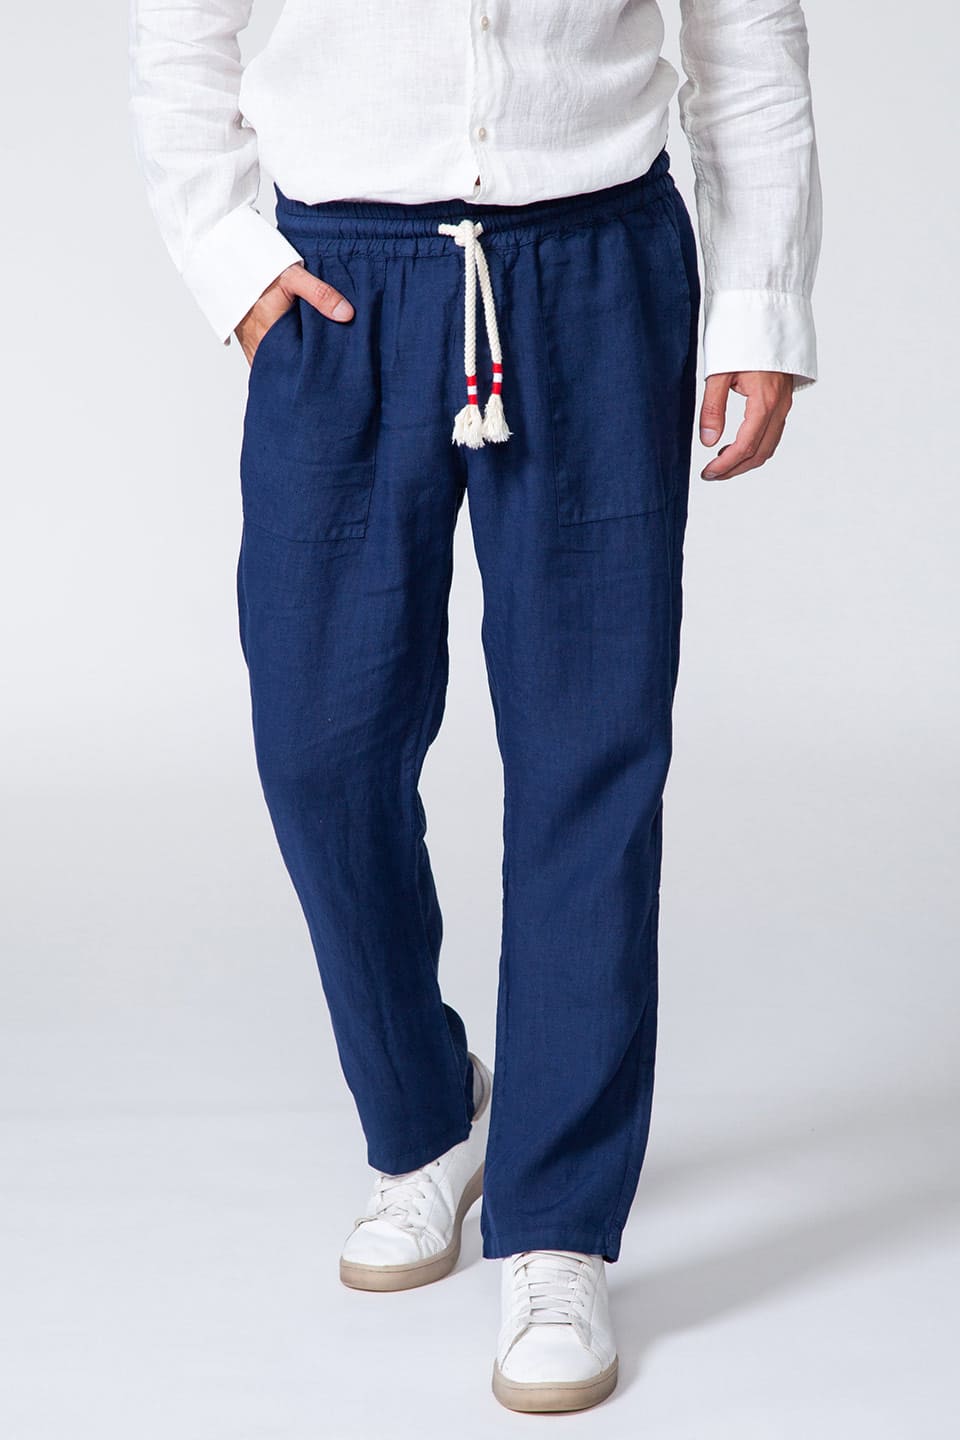 Thumbnail for Product gallery 7, MC saint barth male calais trousers navy blue main